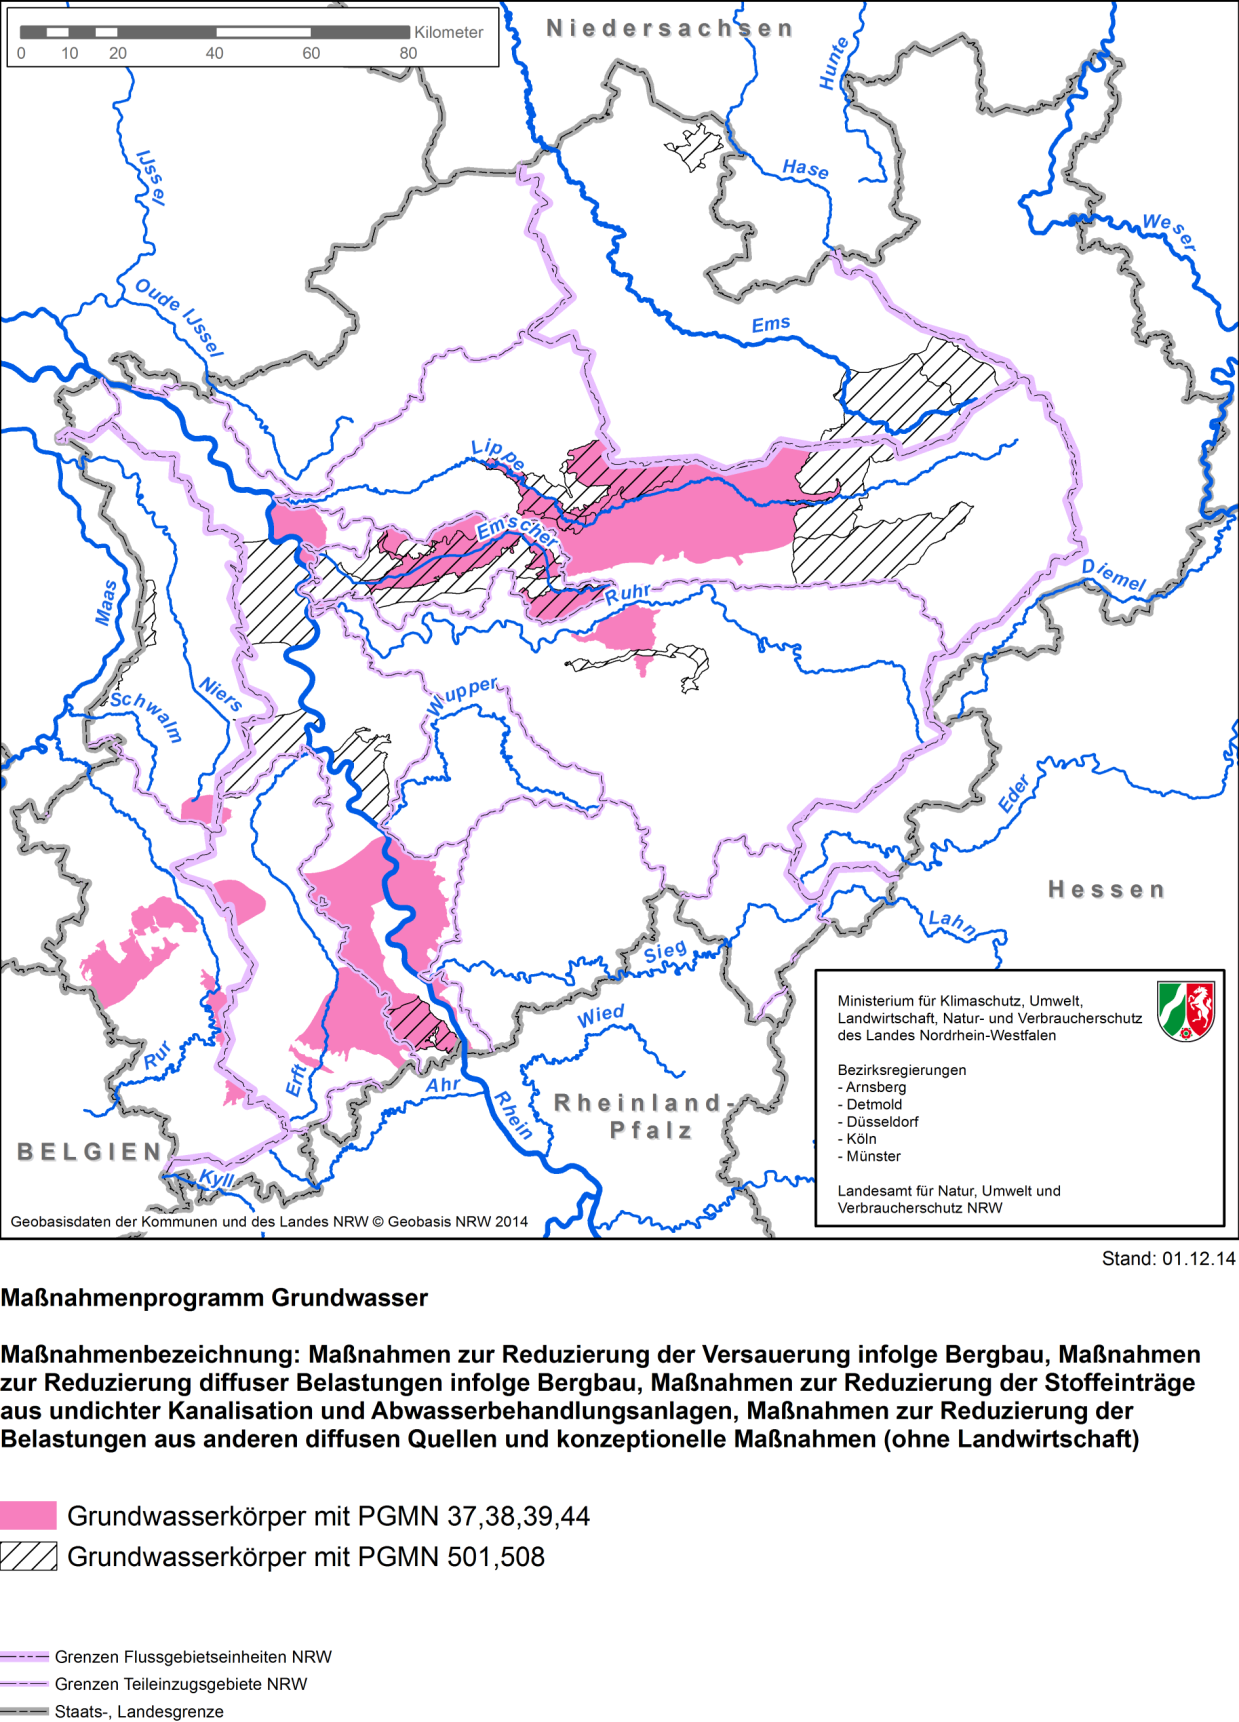 PGMN = Programmmaßnahme Abbildung 6-5: Maßnahmenprogramm Grundwasser, Programmmaßnahmen